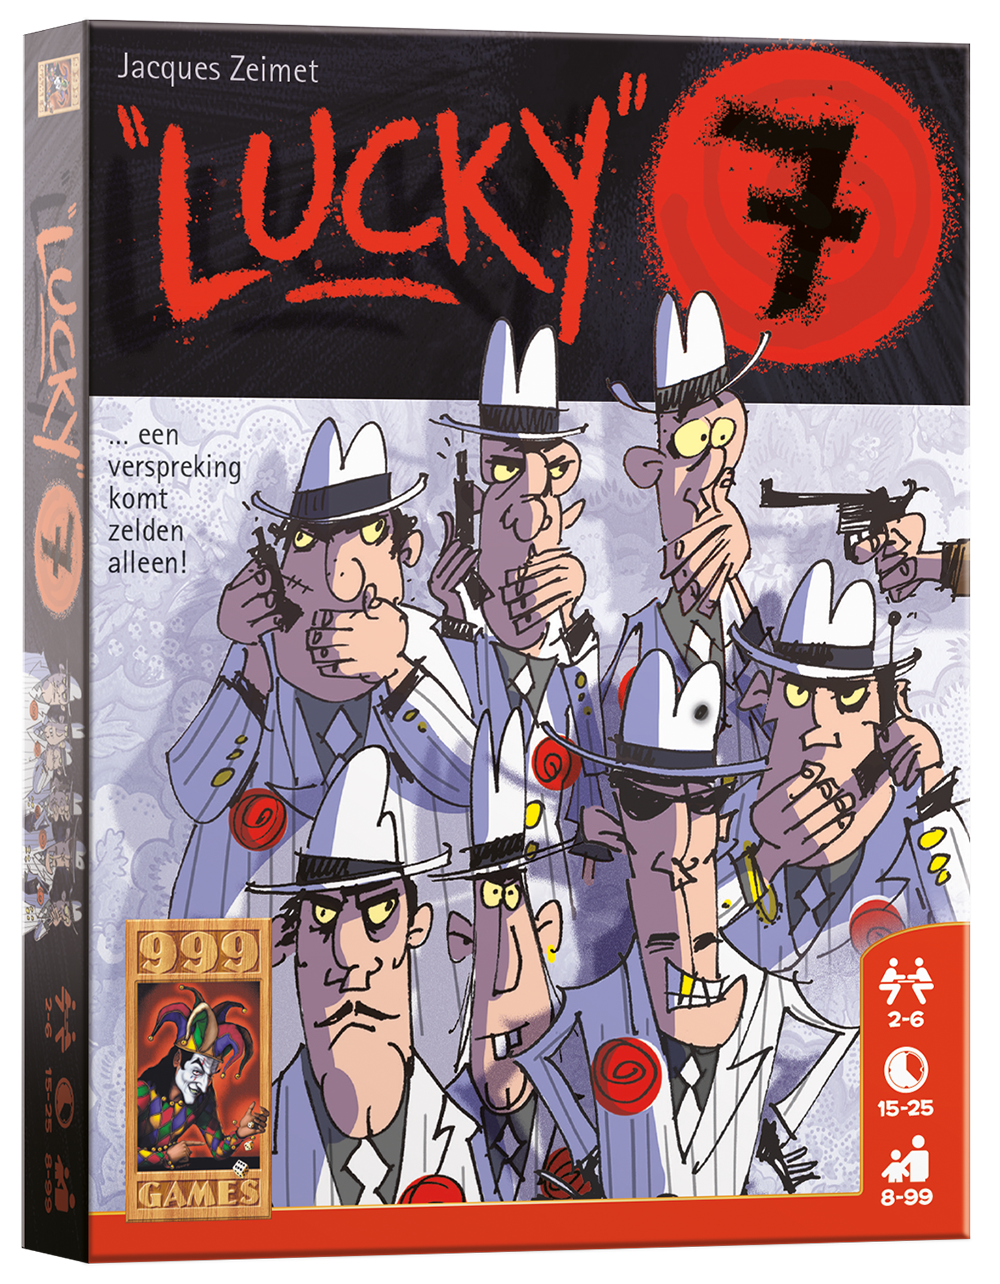 999 Lucky 7 - 8+